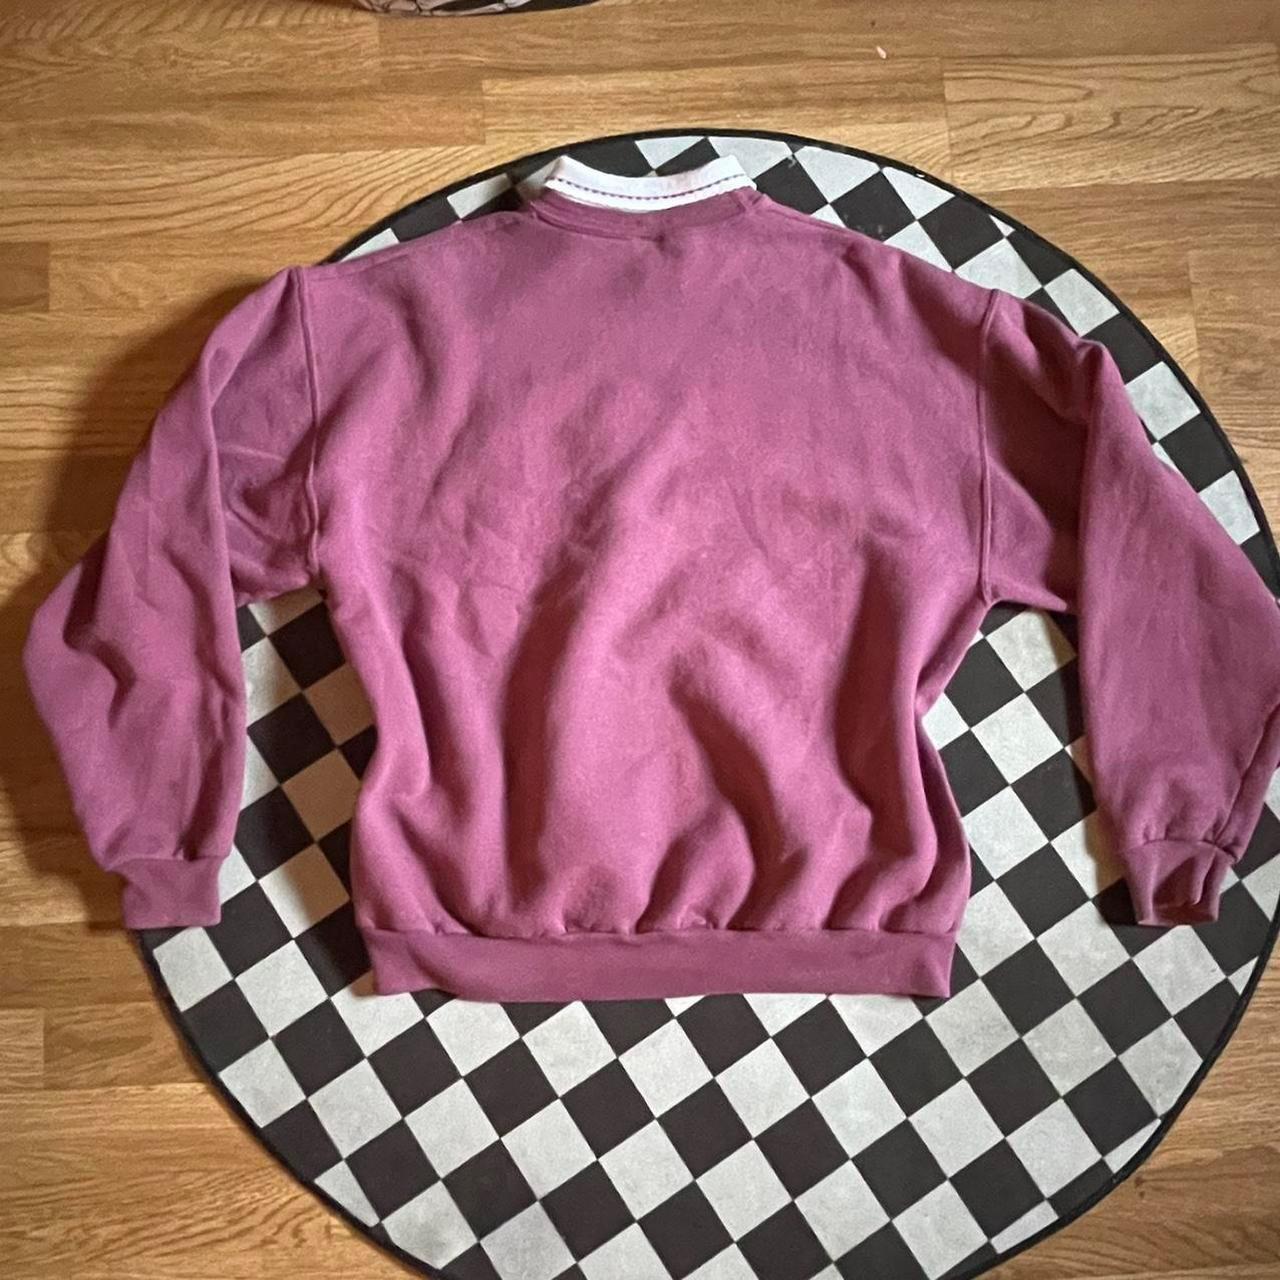 Product Image 3 - collared grandma sweater

•sweater is in